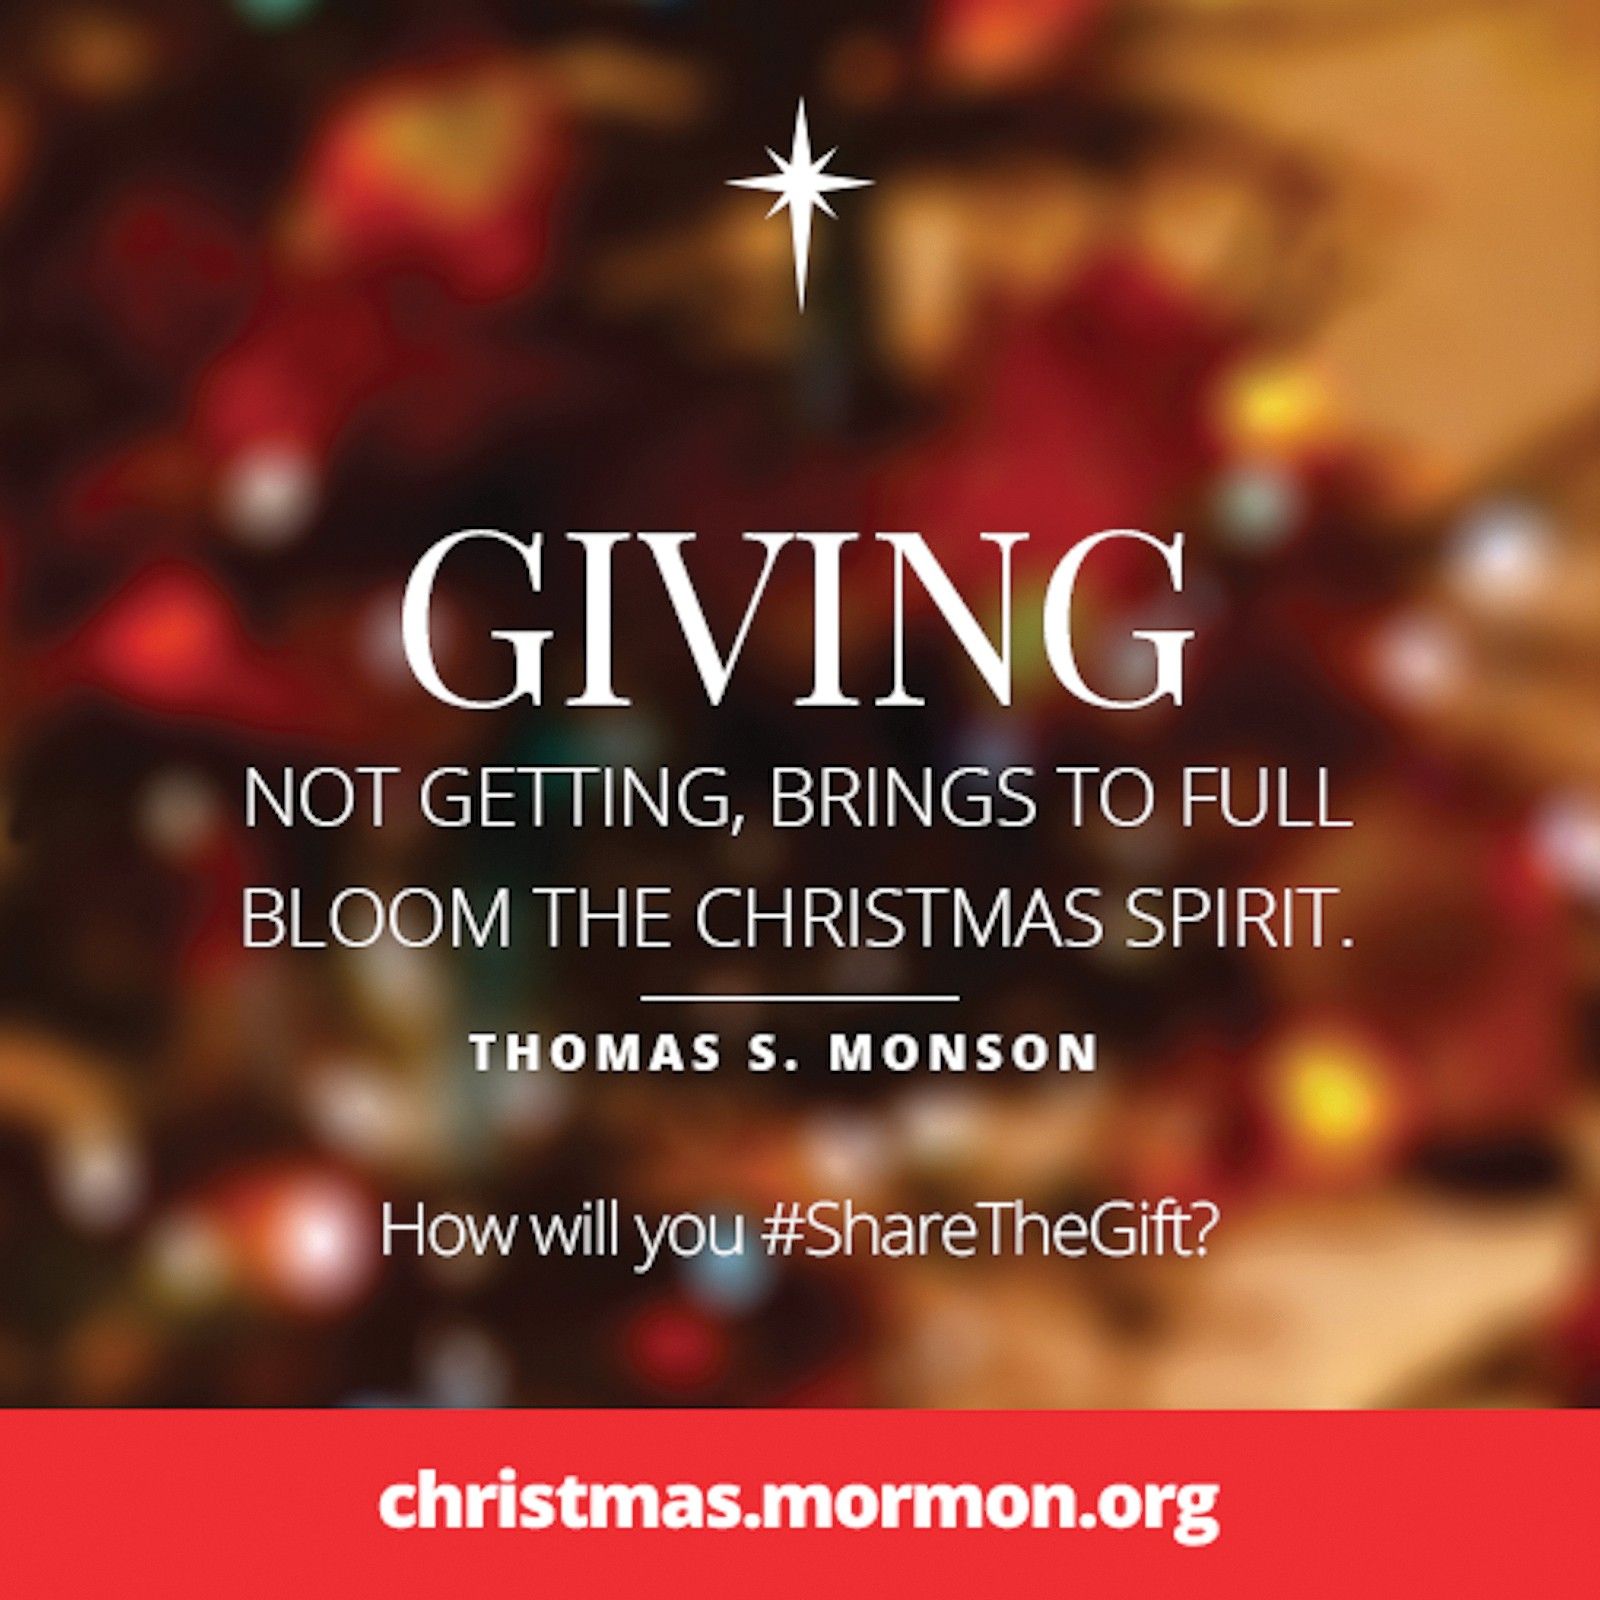 “Giving, not getting, brings to full bloom the Christmas spirit.”—President Thomas S. Monson, “The Real Joy of Christmas”